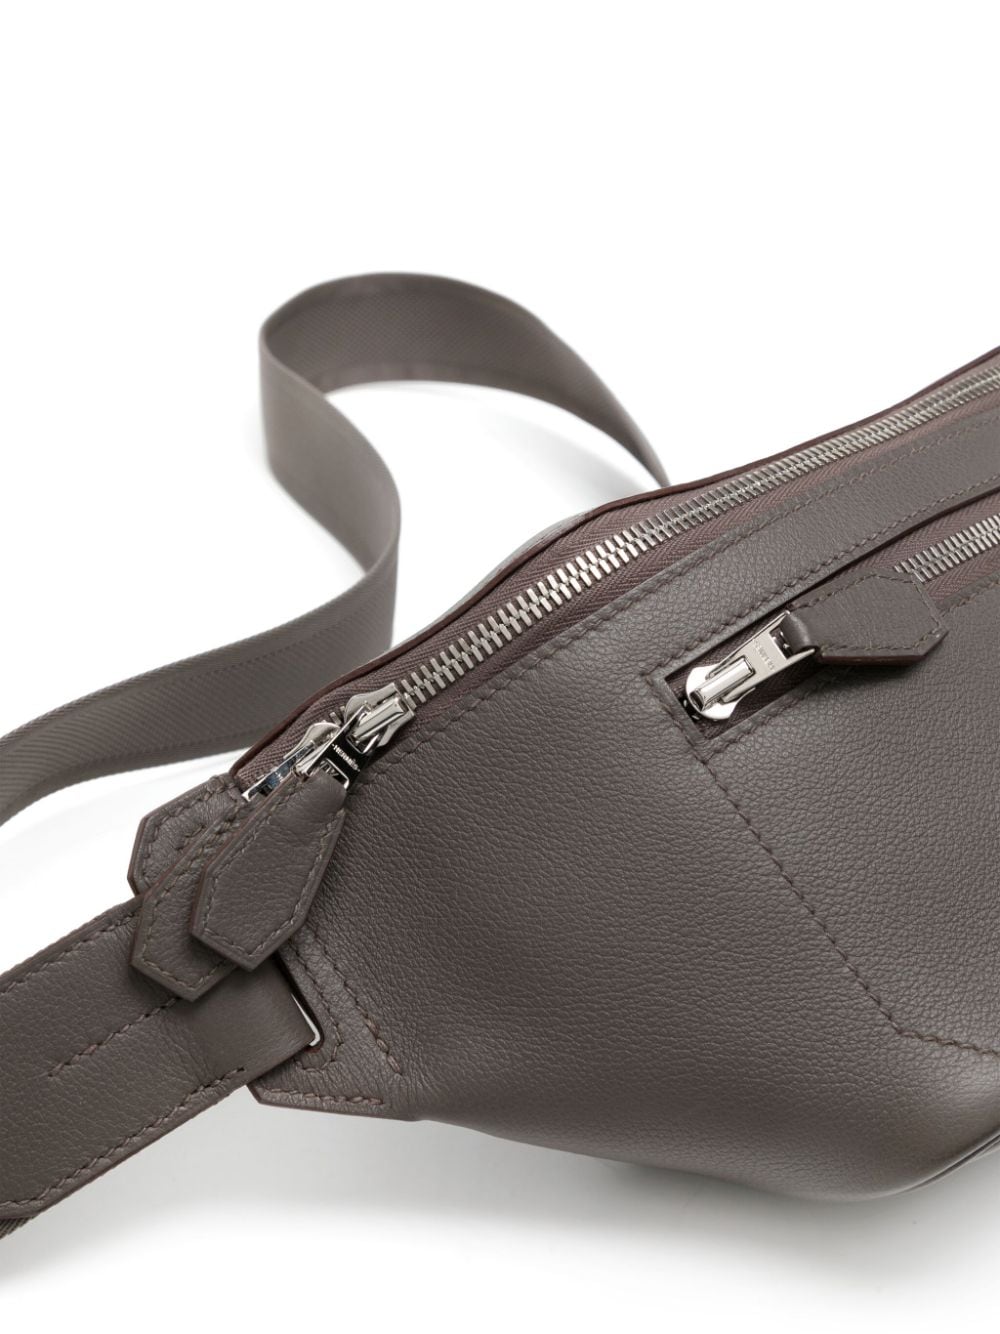 Hermès Belt Bag - Farfetch